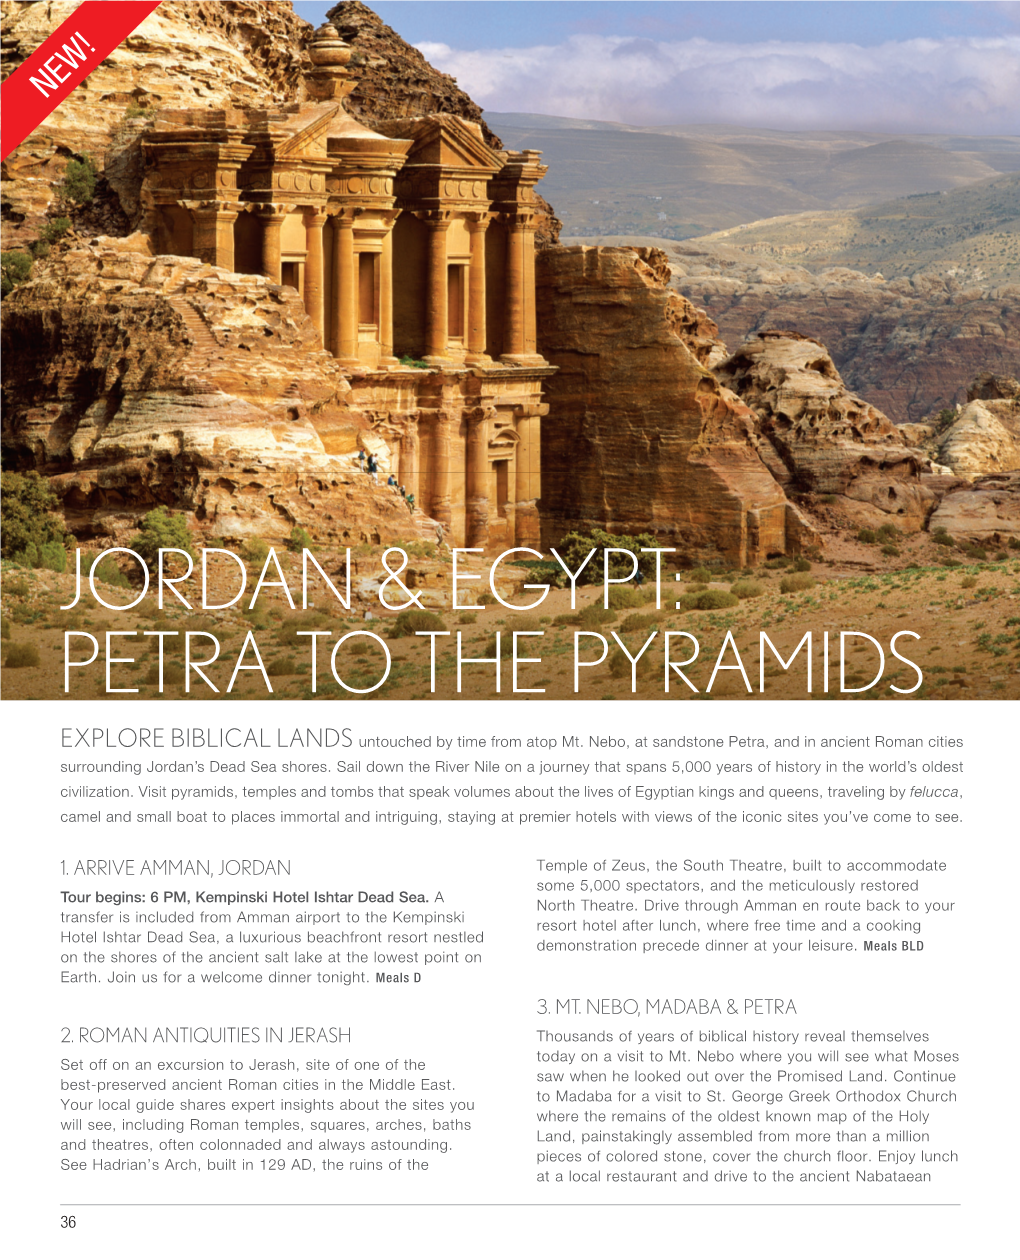 Jordan & Egypt: Petra to the Pyramids